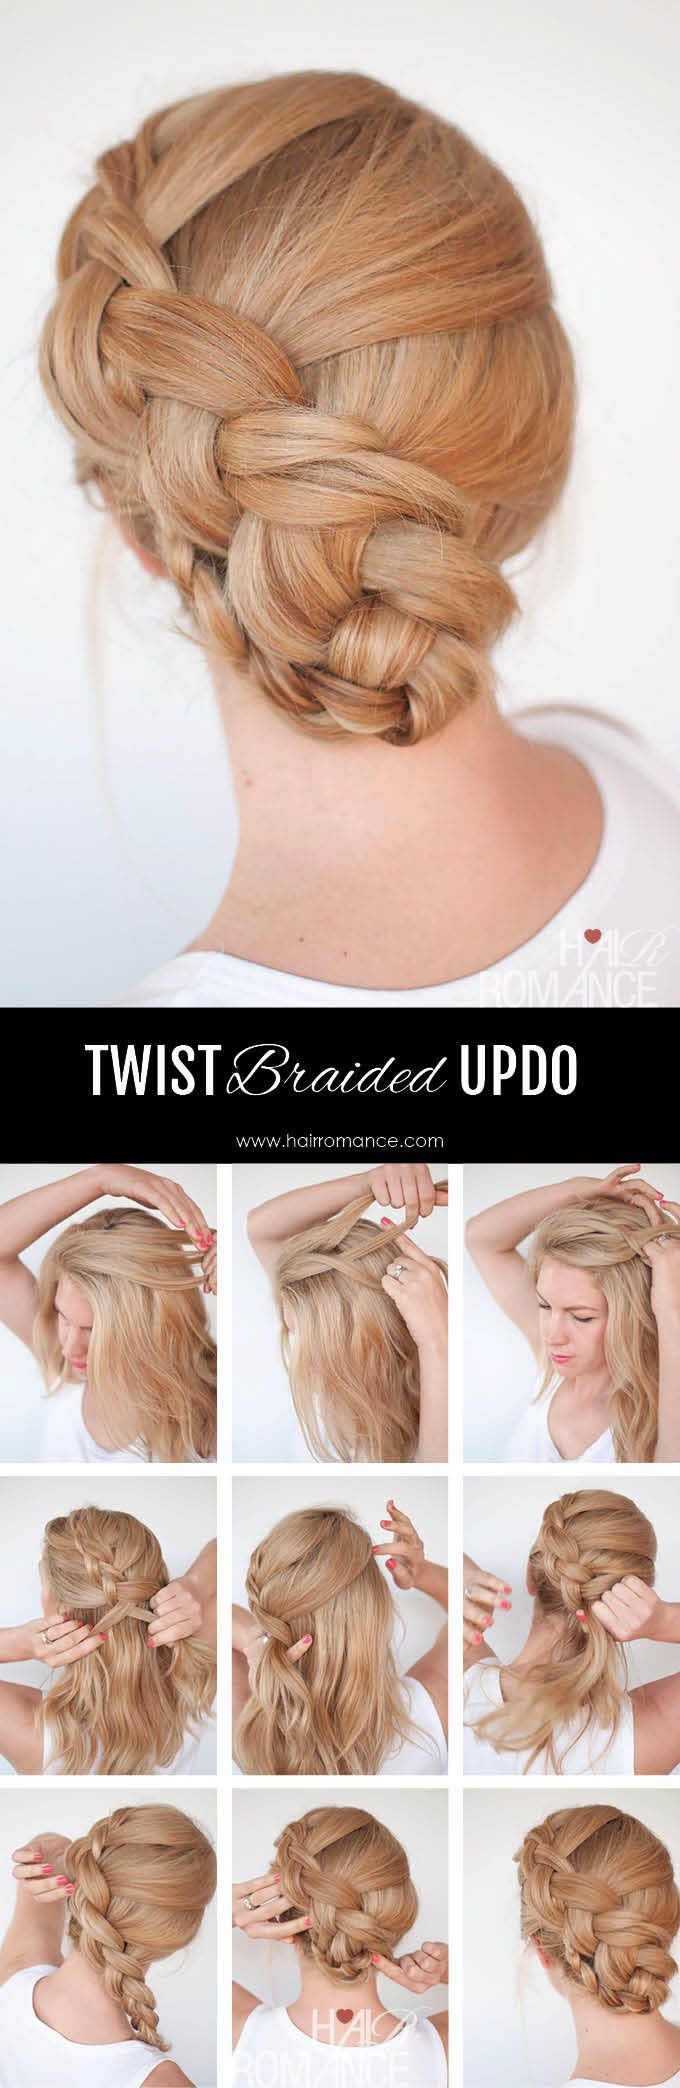 New braid hairstyle tutorial – the twist braid updo. Step by step hairdo tutor...